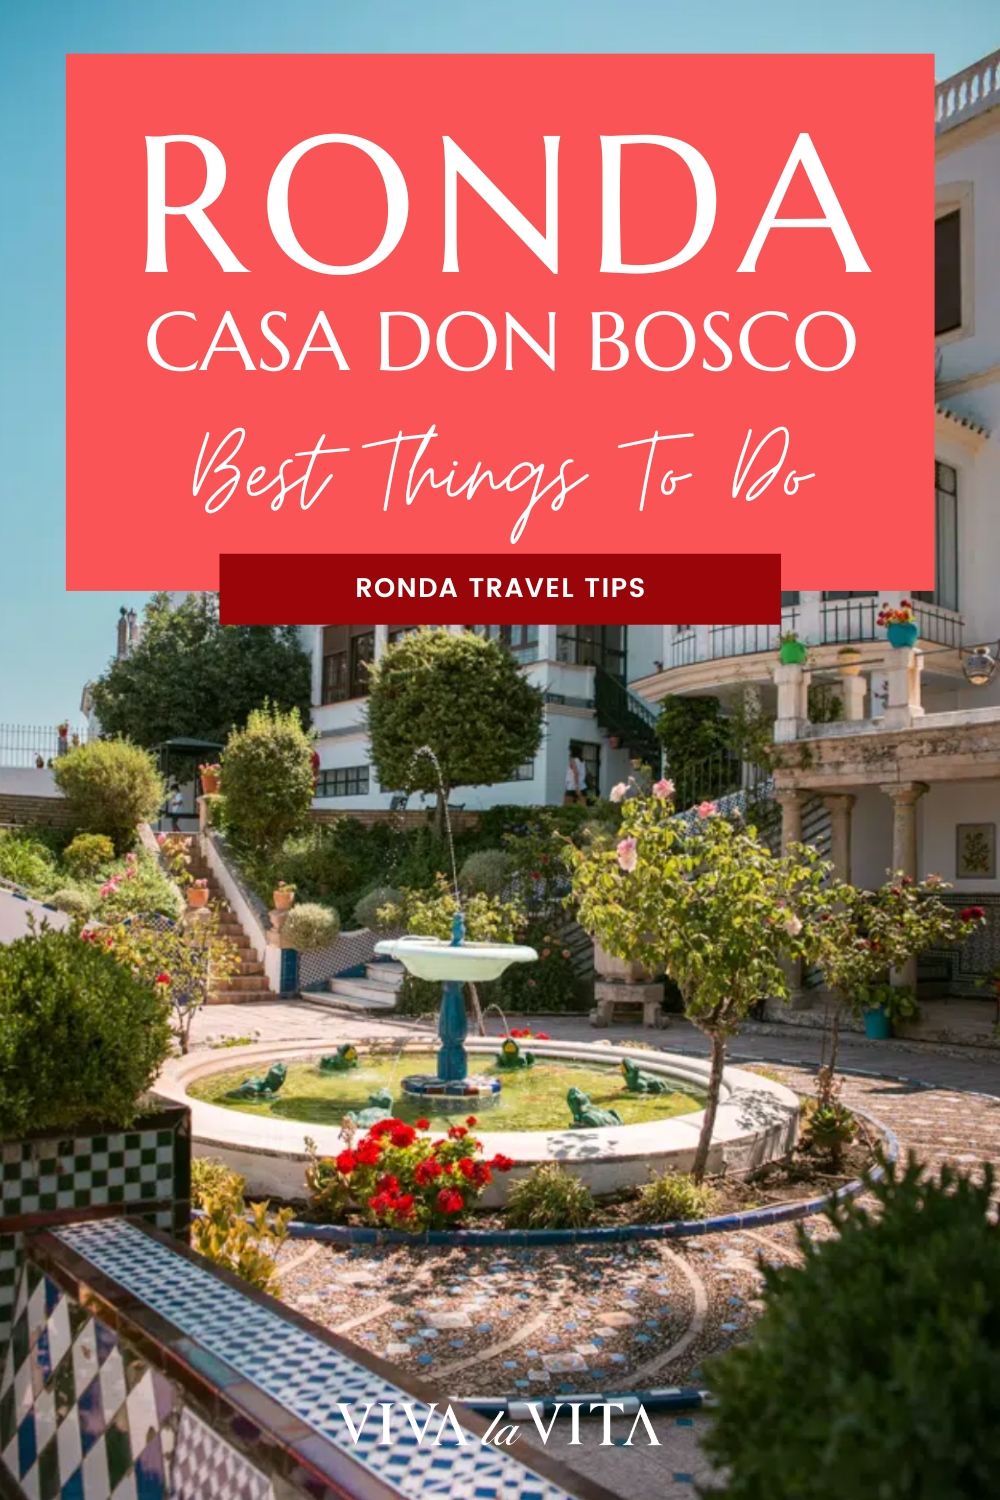 The gardens of Casa don Bosco in Ronda, Southern Spain with a headline: Ronda Casa don Bosco, best things to do, Ronda travel tips